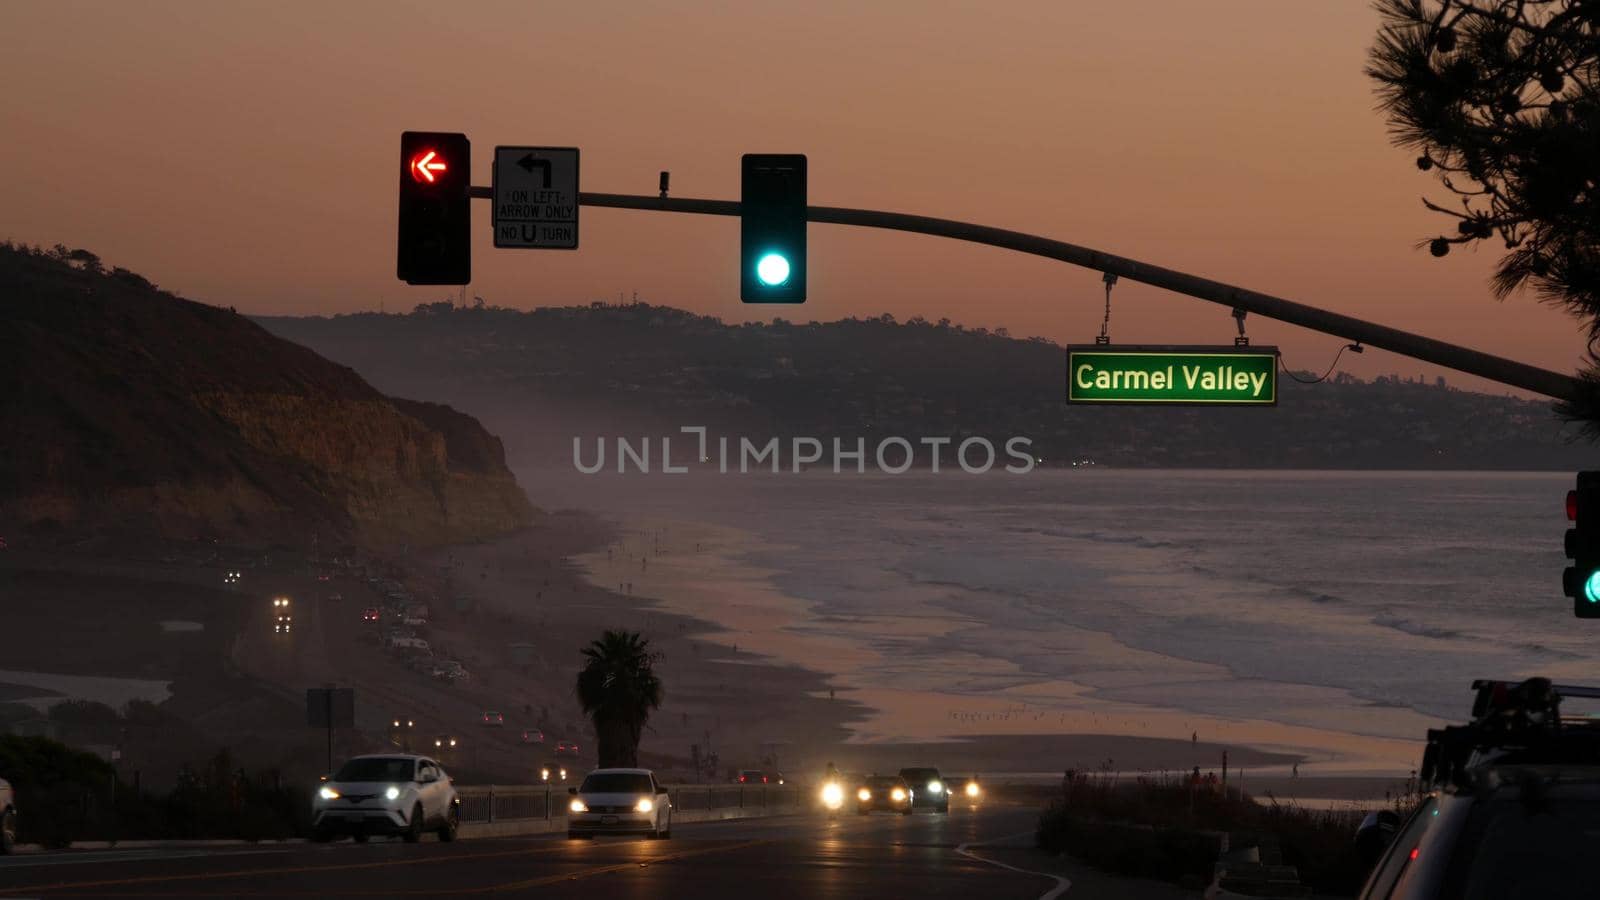 Traffic lights, pacific coast highway, California. Road trip along ocean in dusk by DogoraSun